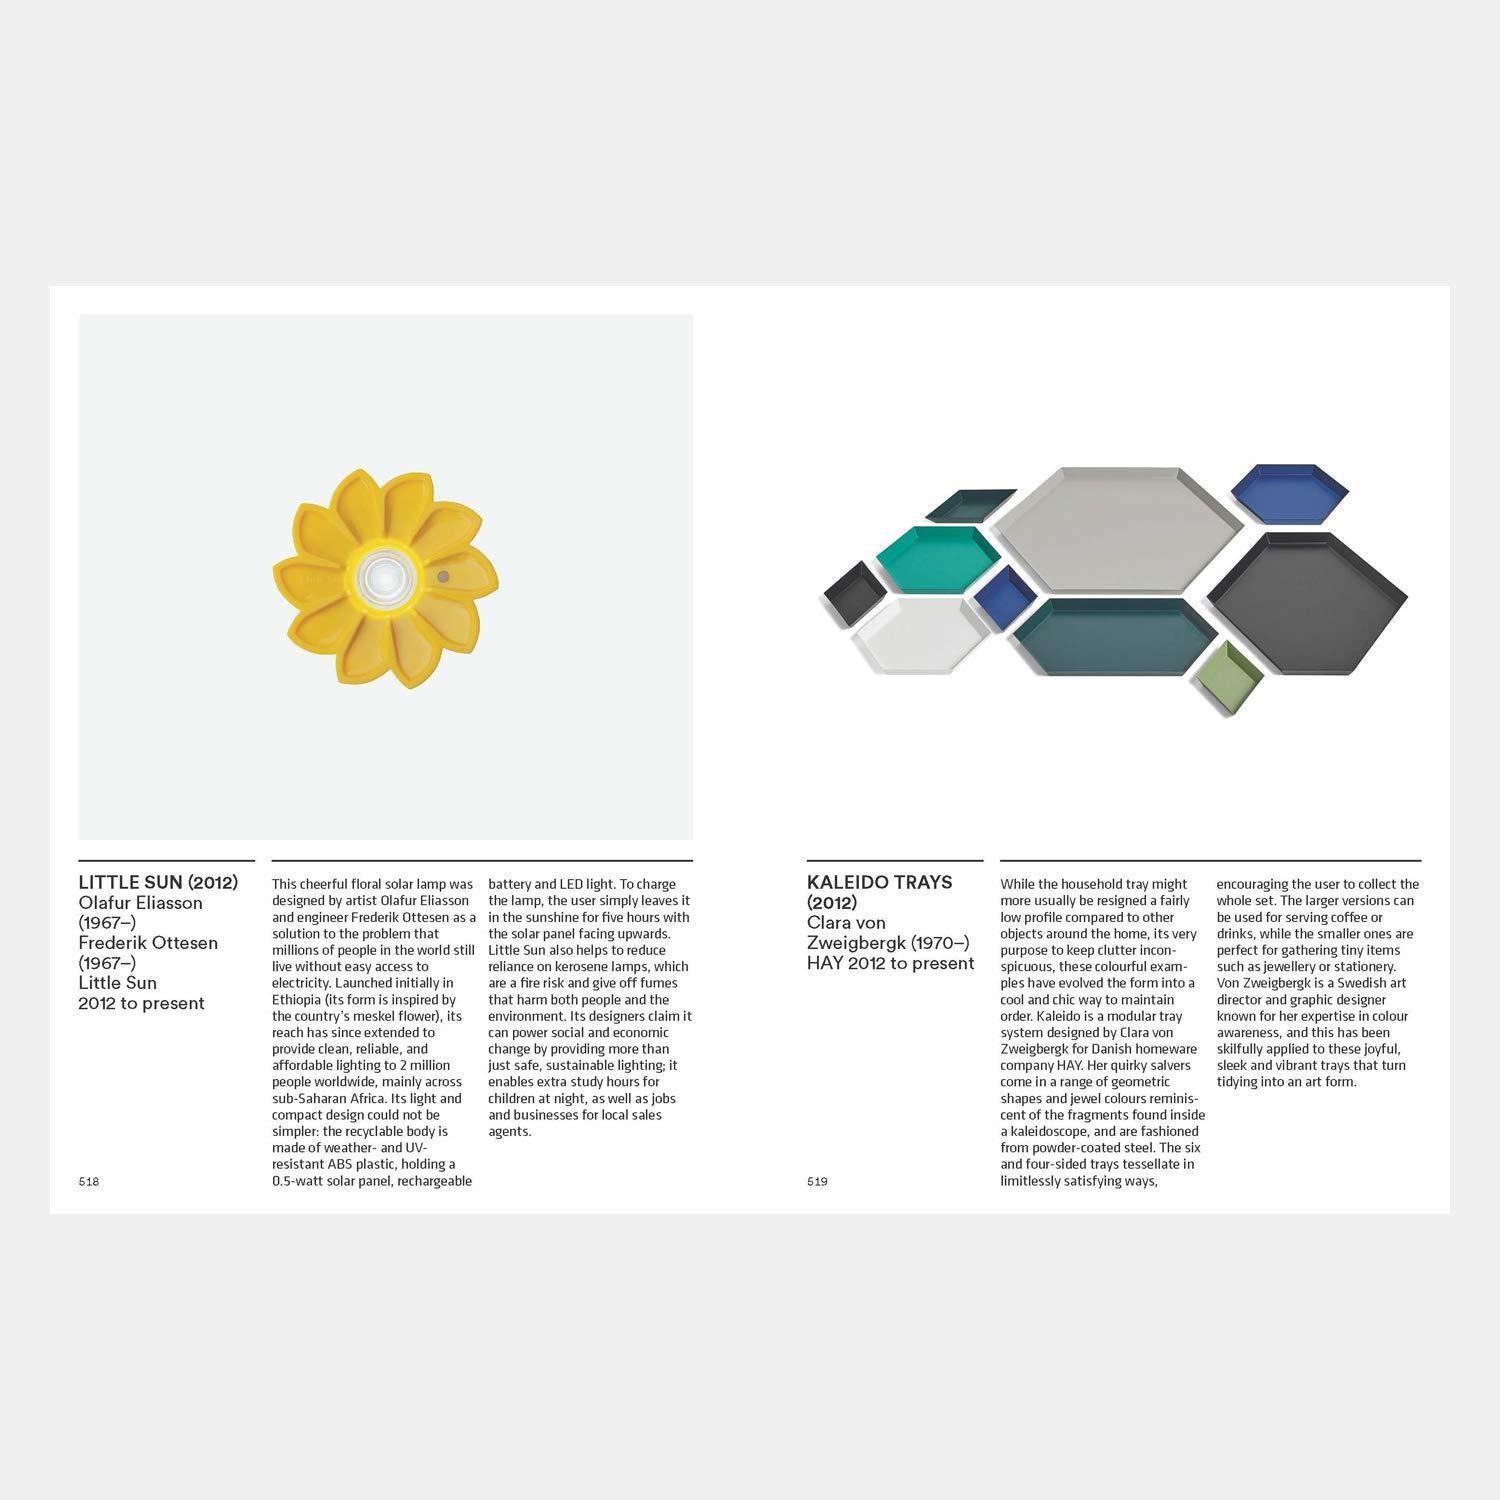 Bild: 9781838661434 | The Design Book, new edition | Editors Phaidon | Buch | Englisch